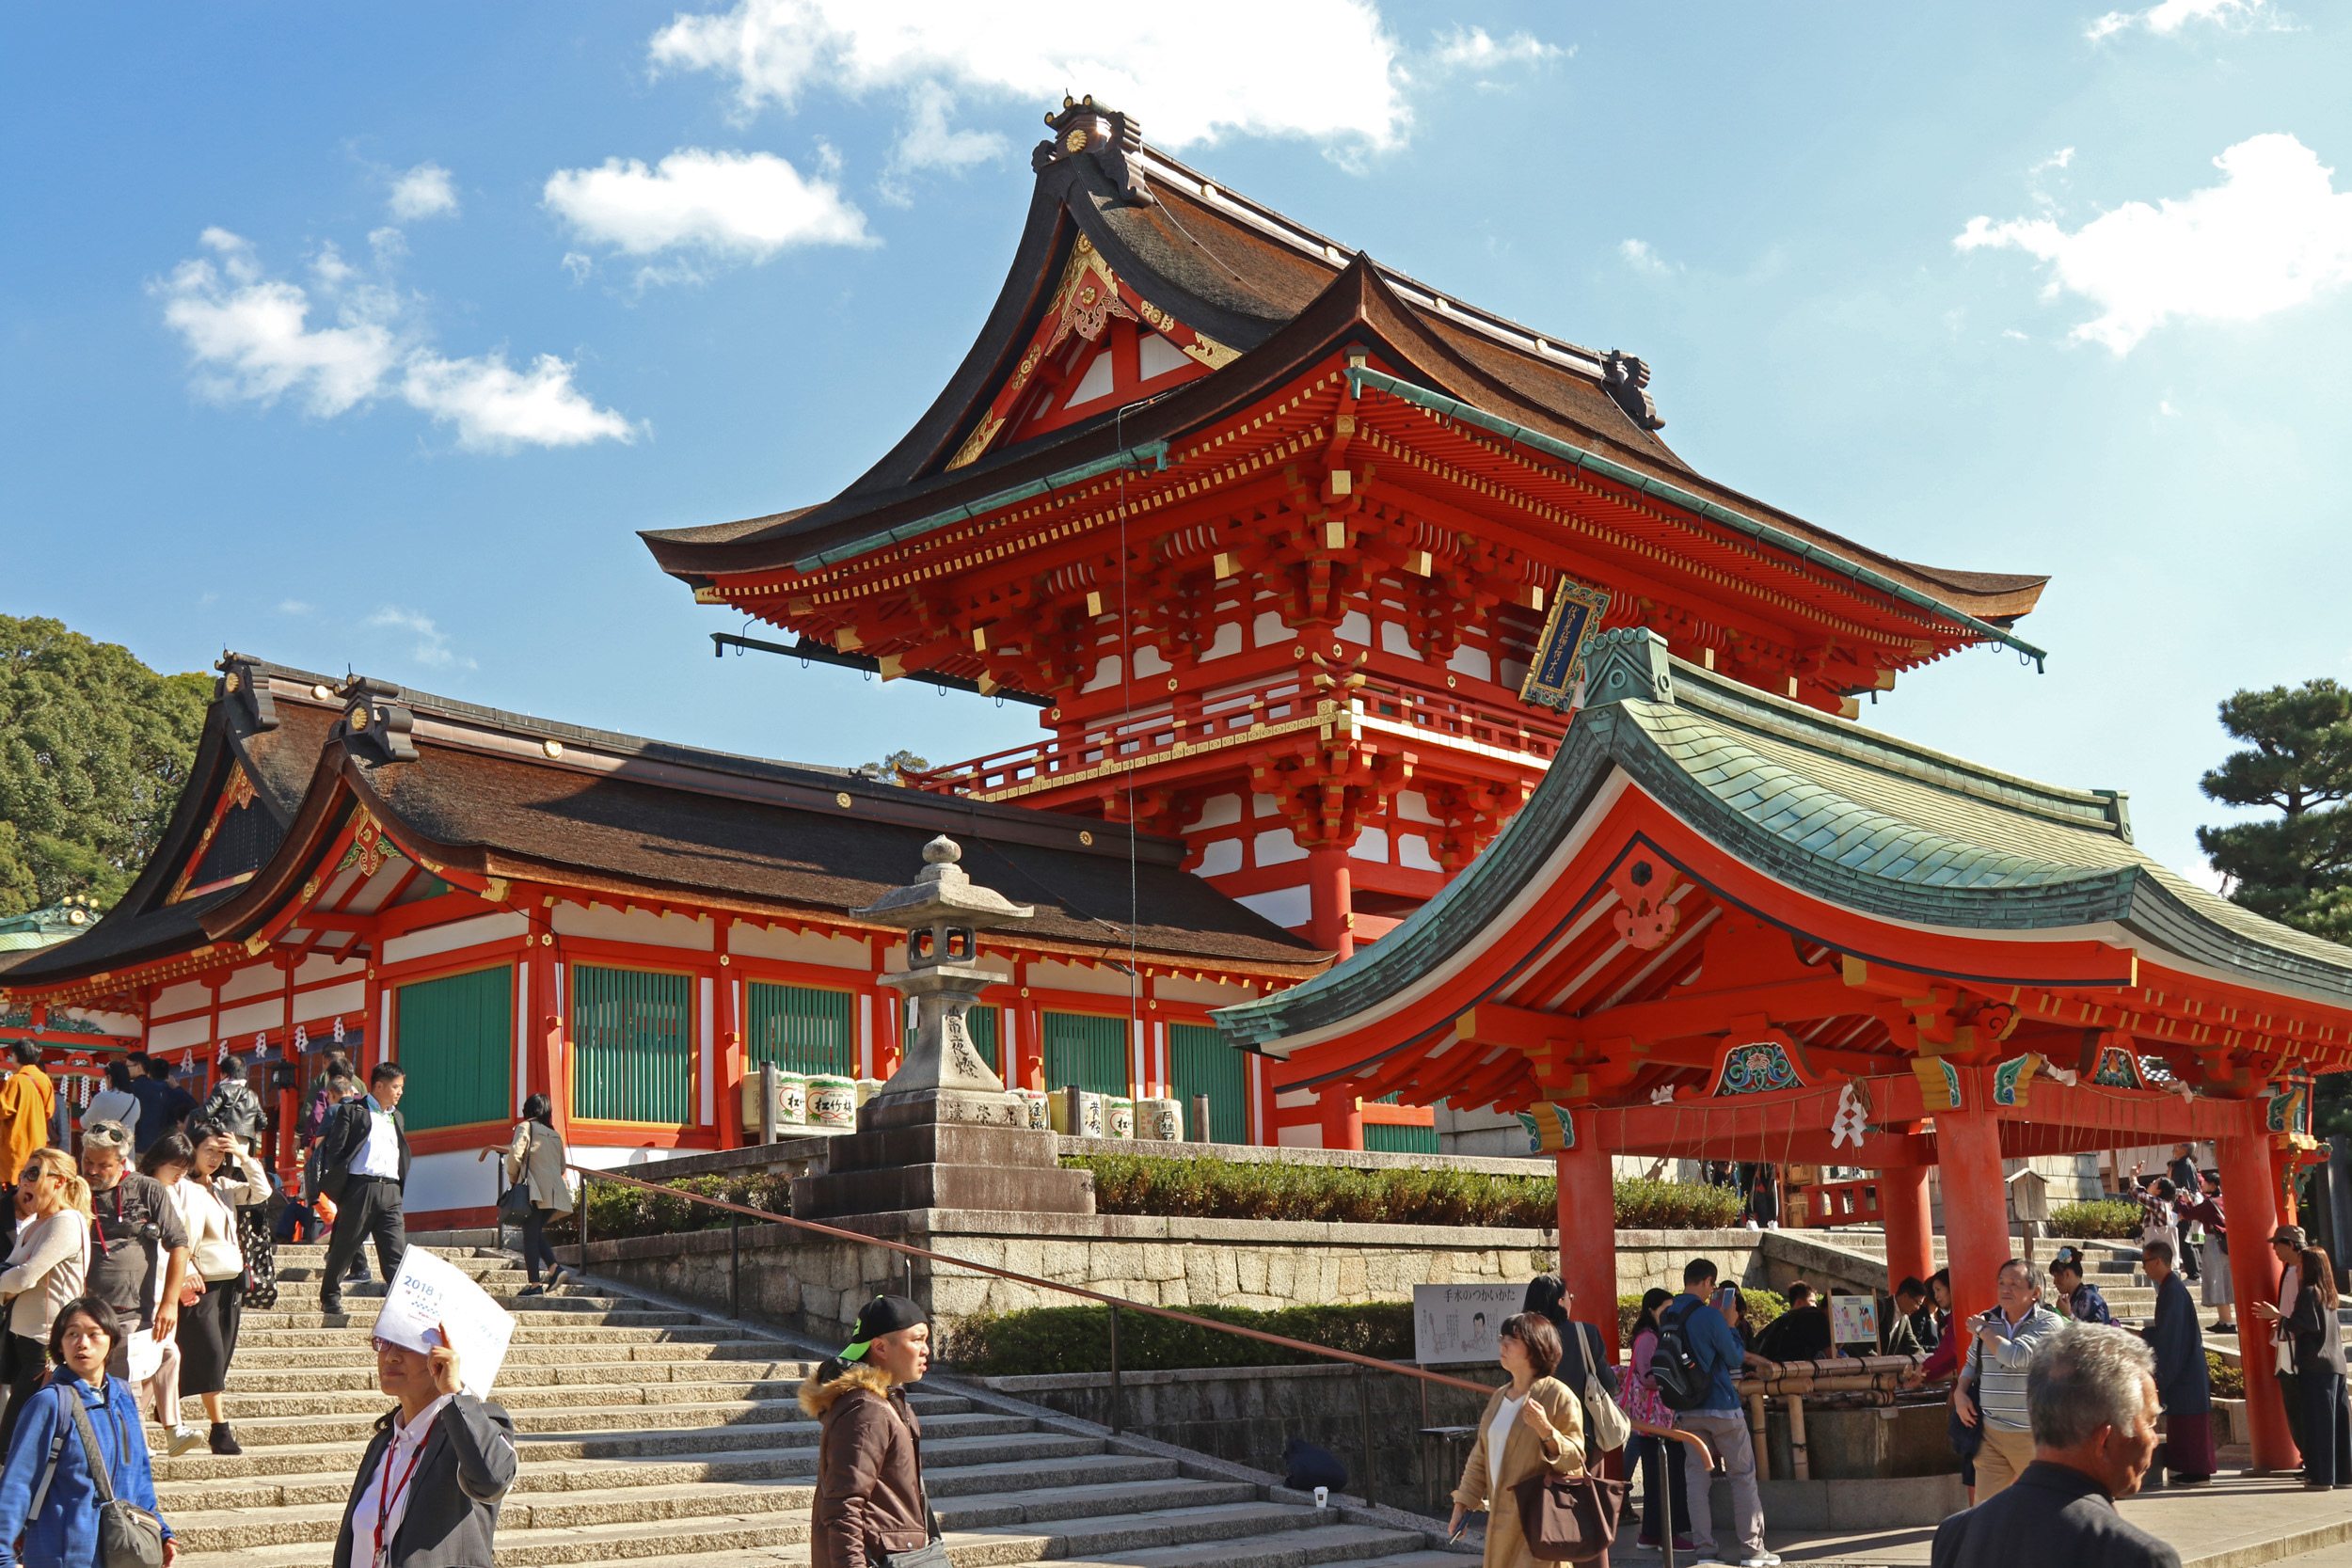 Entrance to Fushimi Inari Shrine